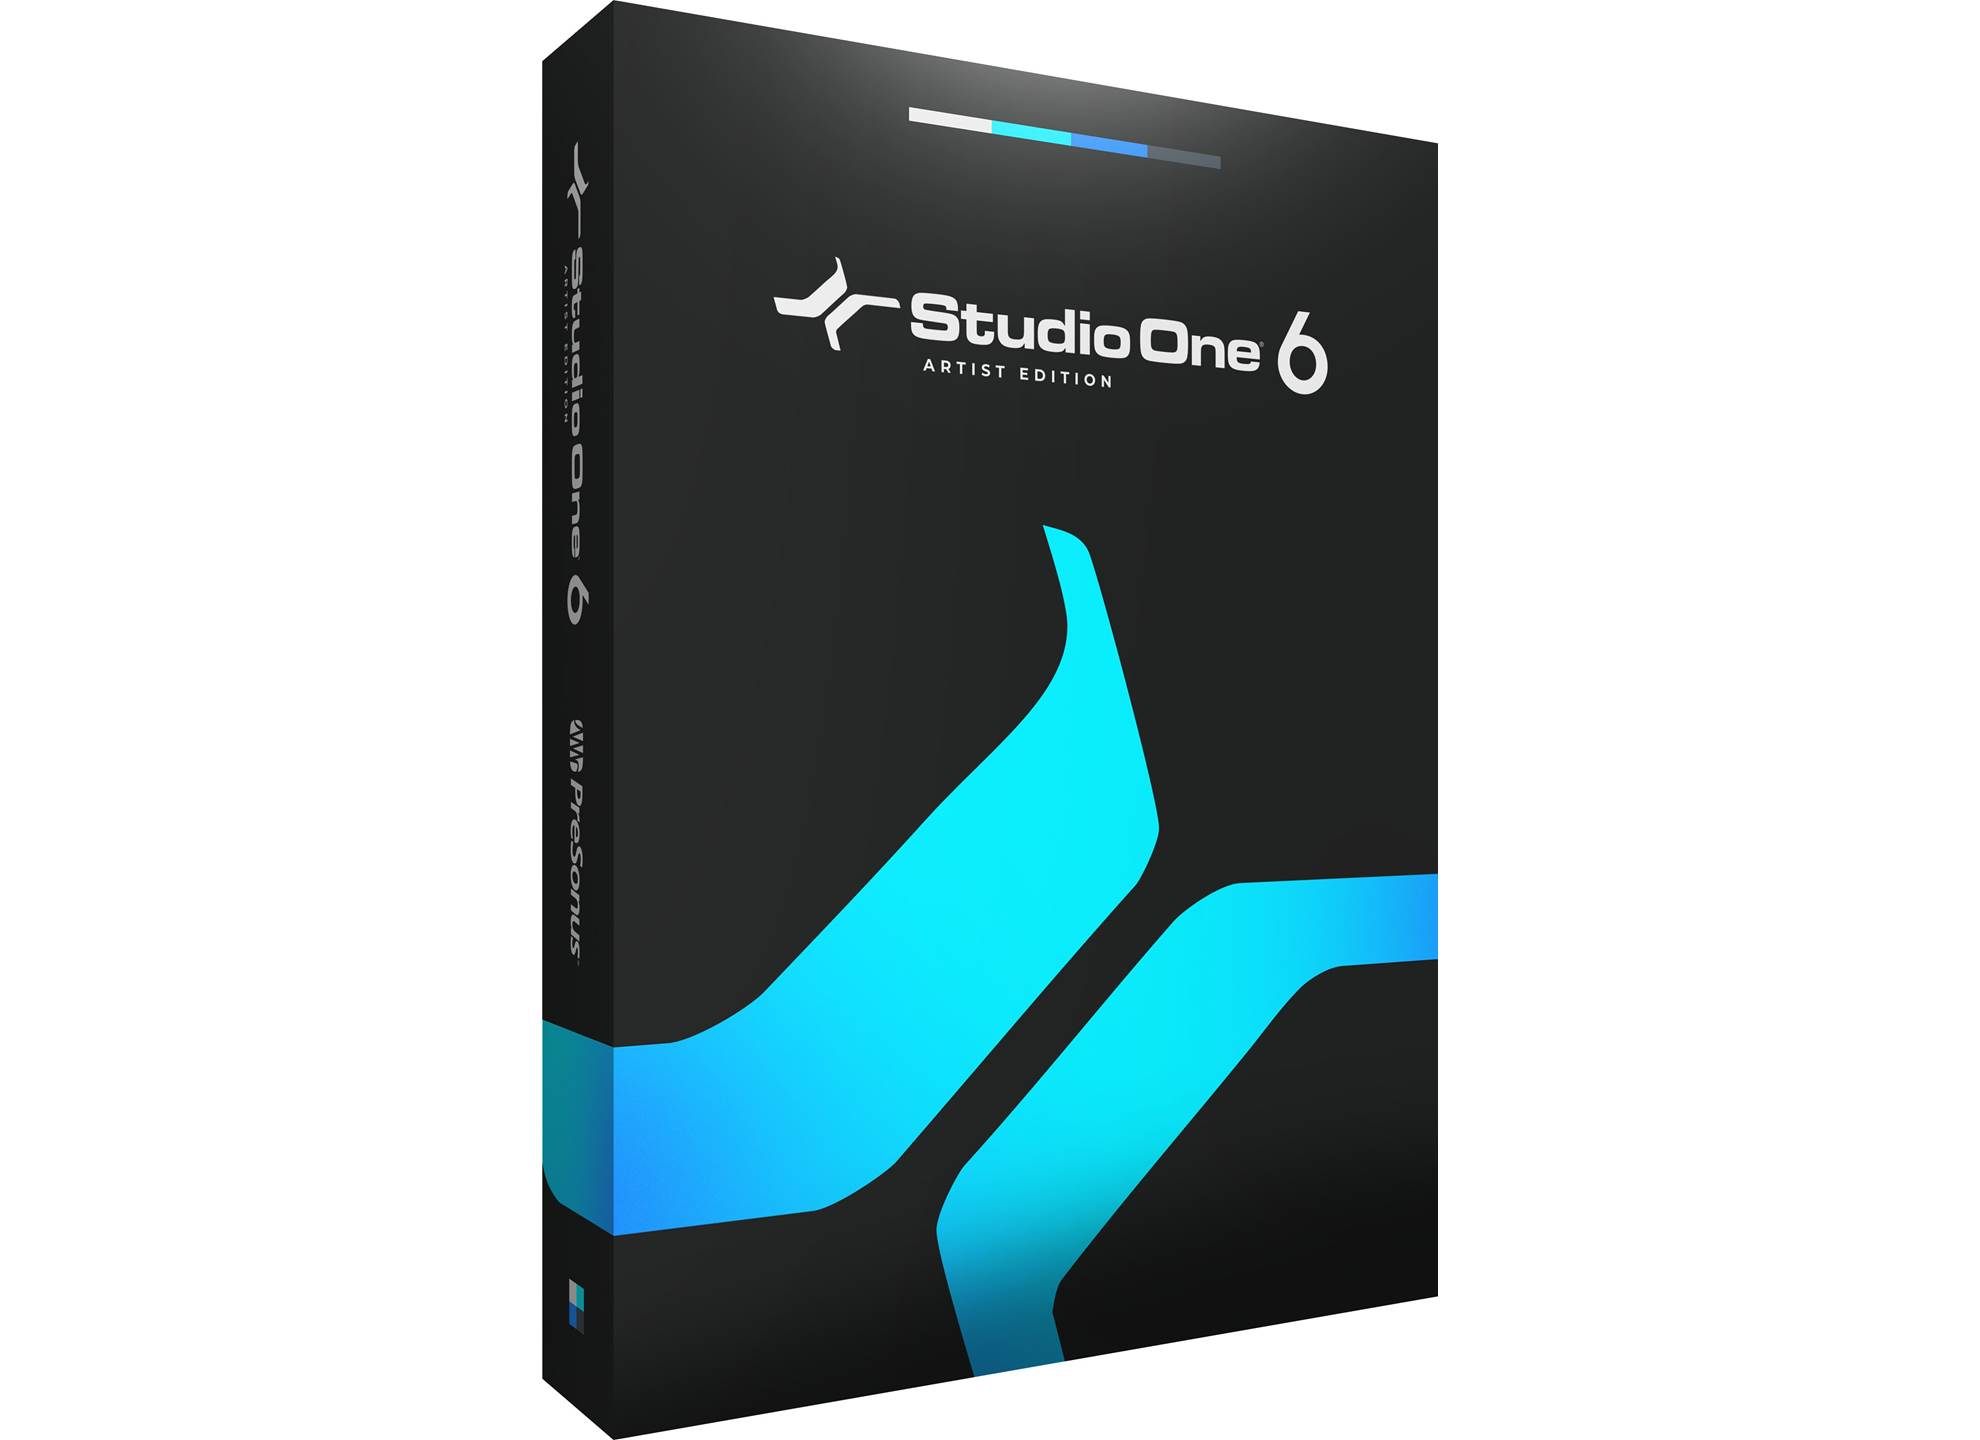 Studio One 6 Professional Update Pro skola och student